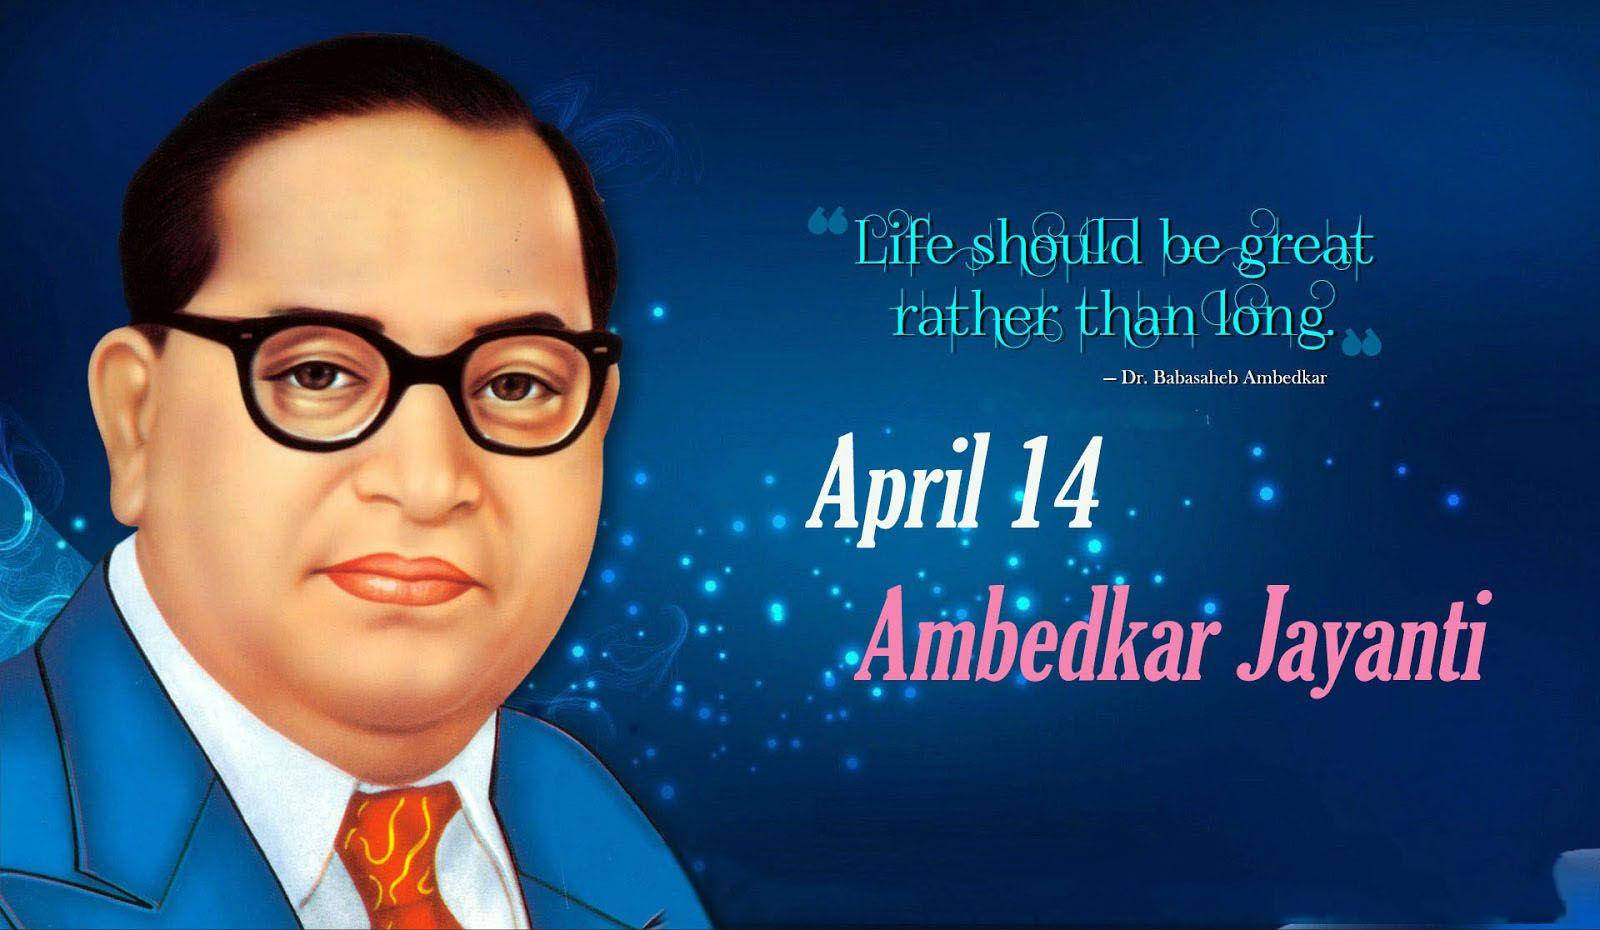 Drbabasaheb Ambedkar-zitat Mit Glitzerndem Hintergrundbild Wallpaper